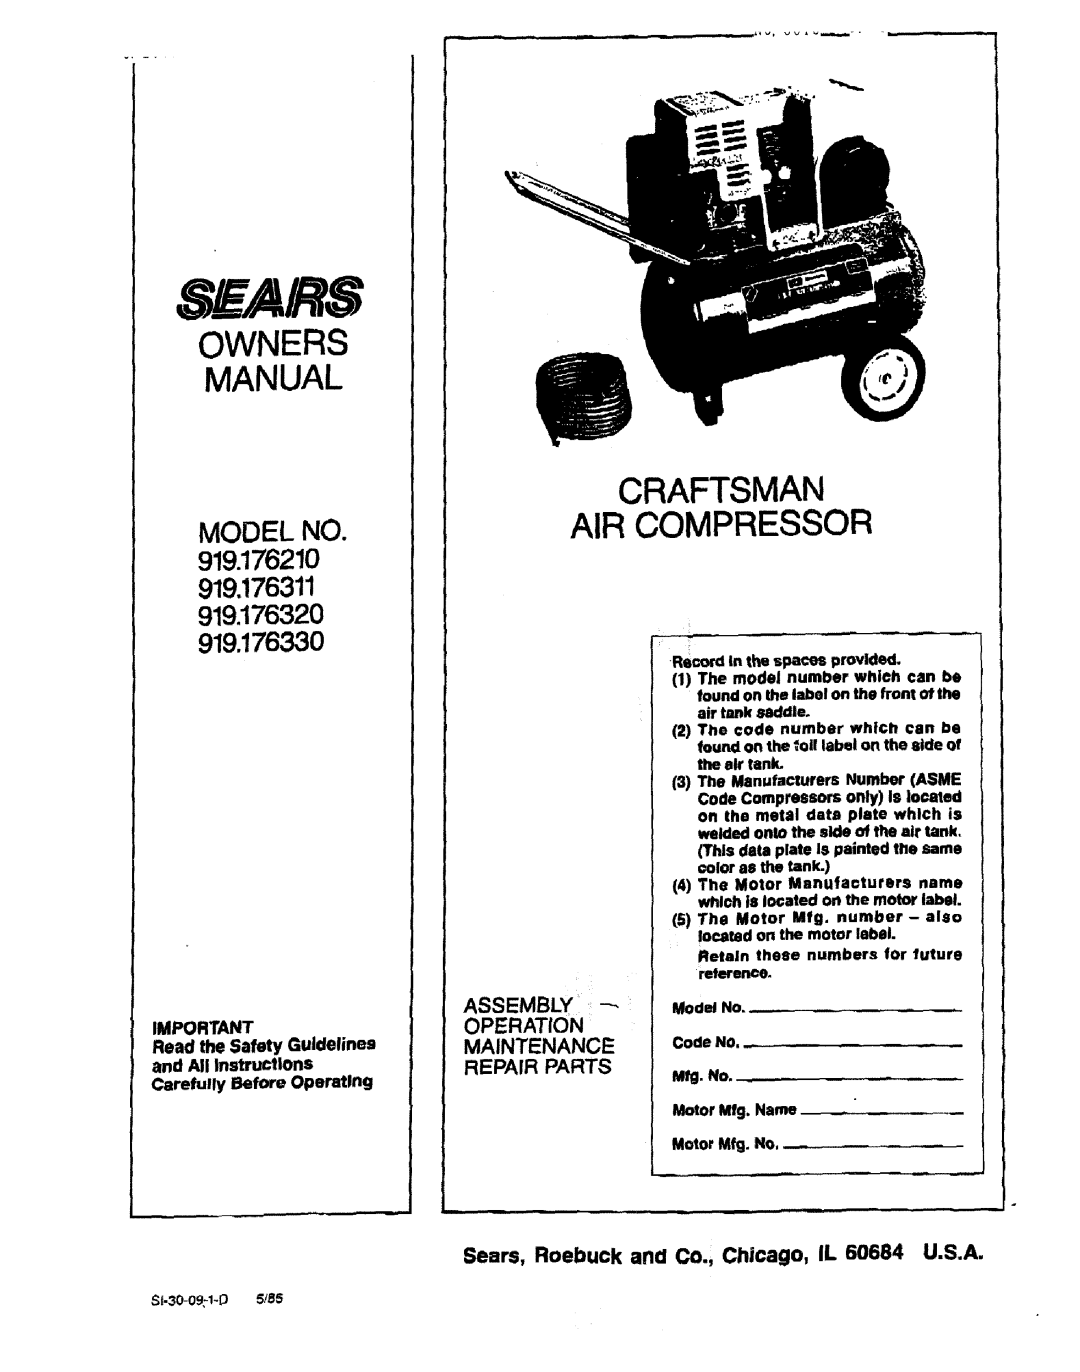 Sears 919.17633, 919.17632 owner manual Owners Manual, Craftsman Air Compressor, MODEL NO. 919.176210 919,176311, Sears 